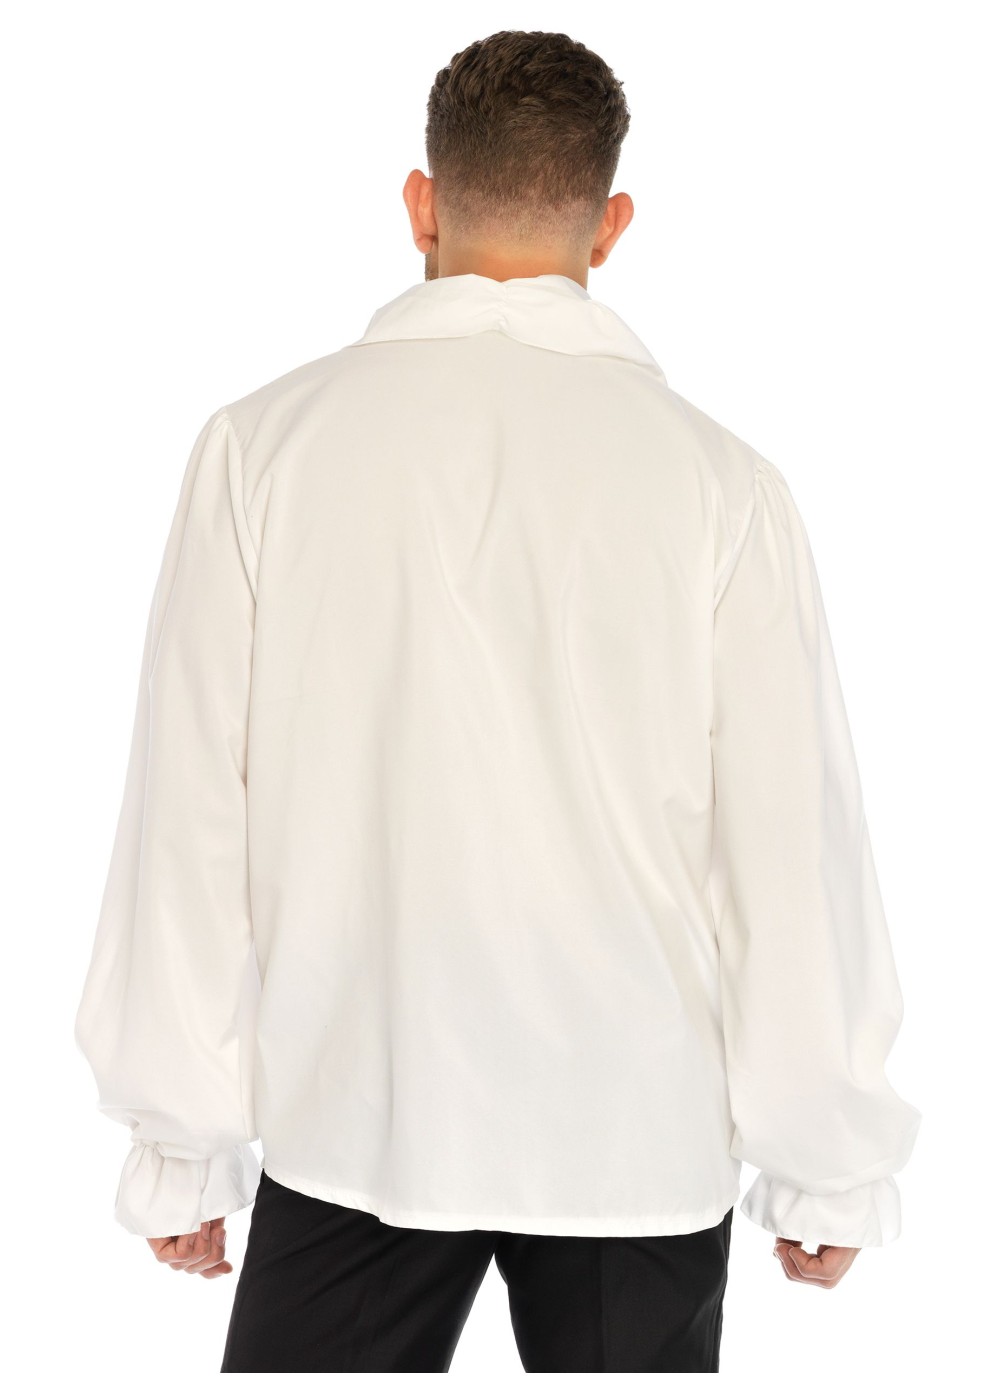 White Ruffled Men Shirt - Renaissance Costumes